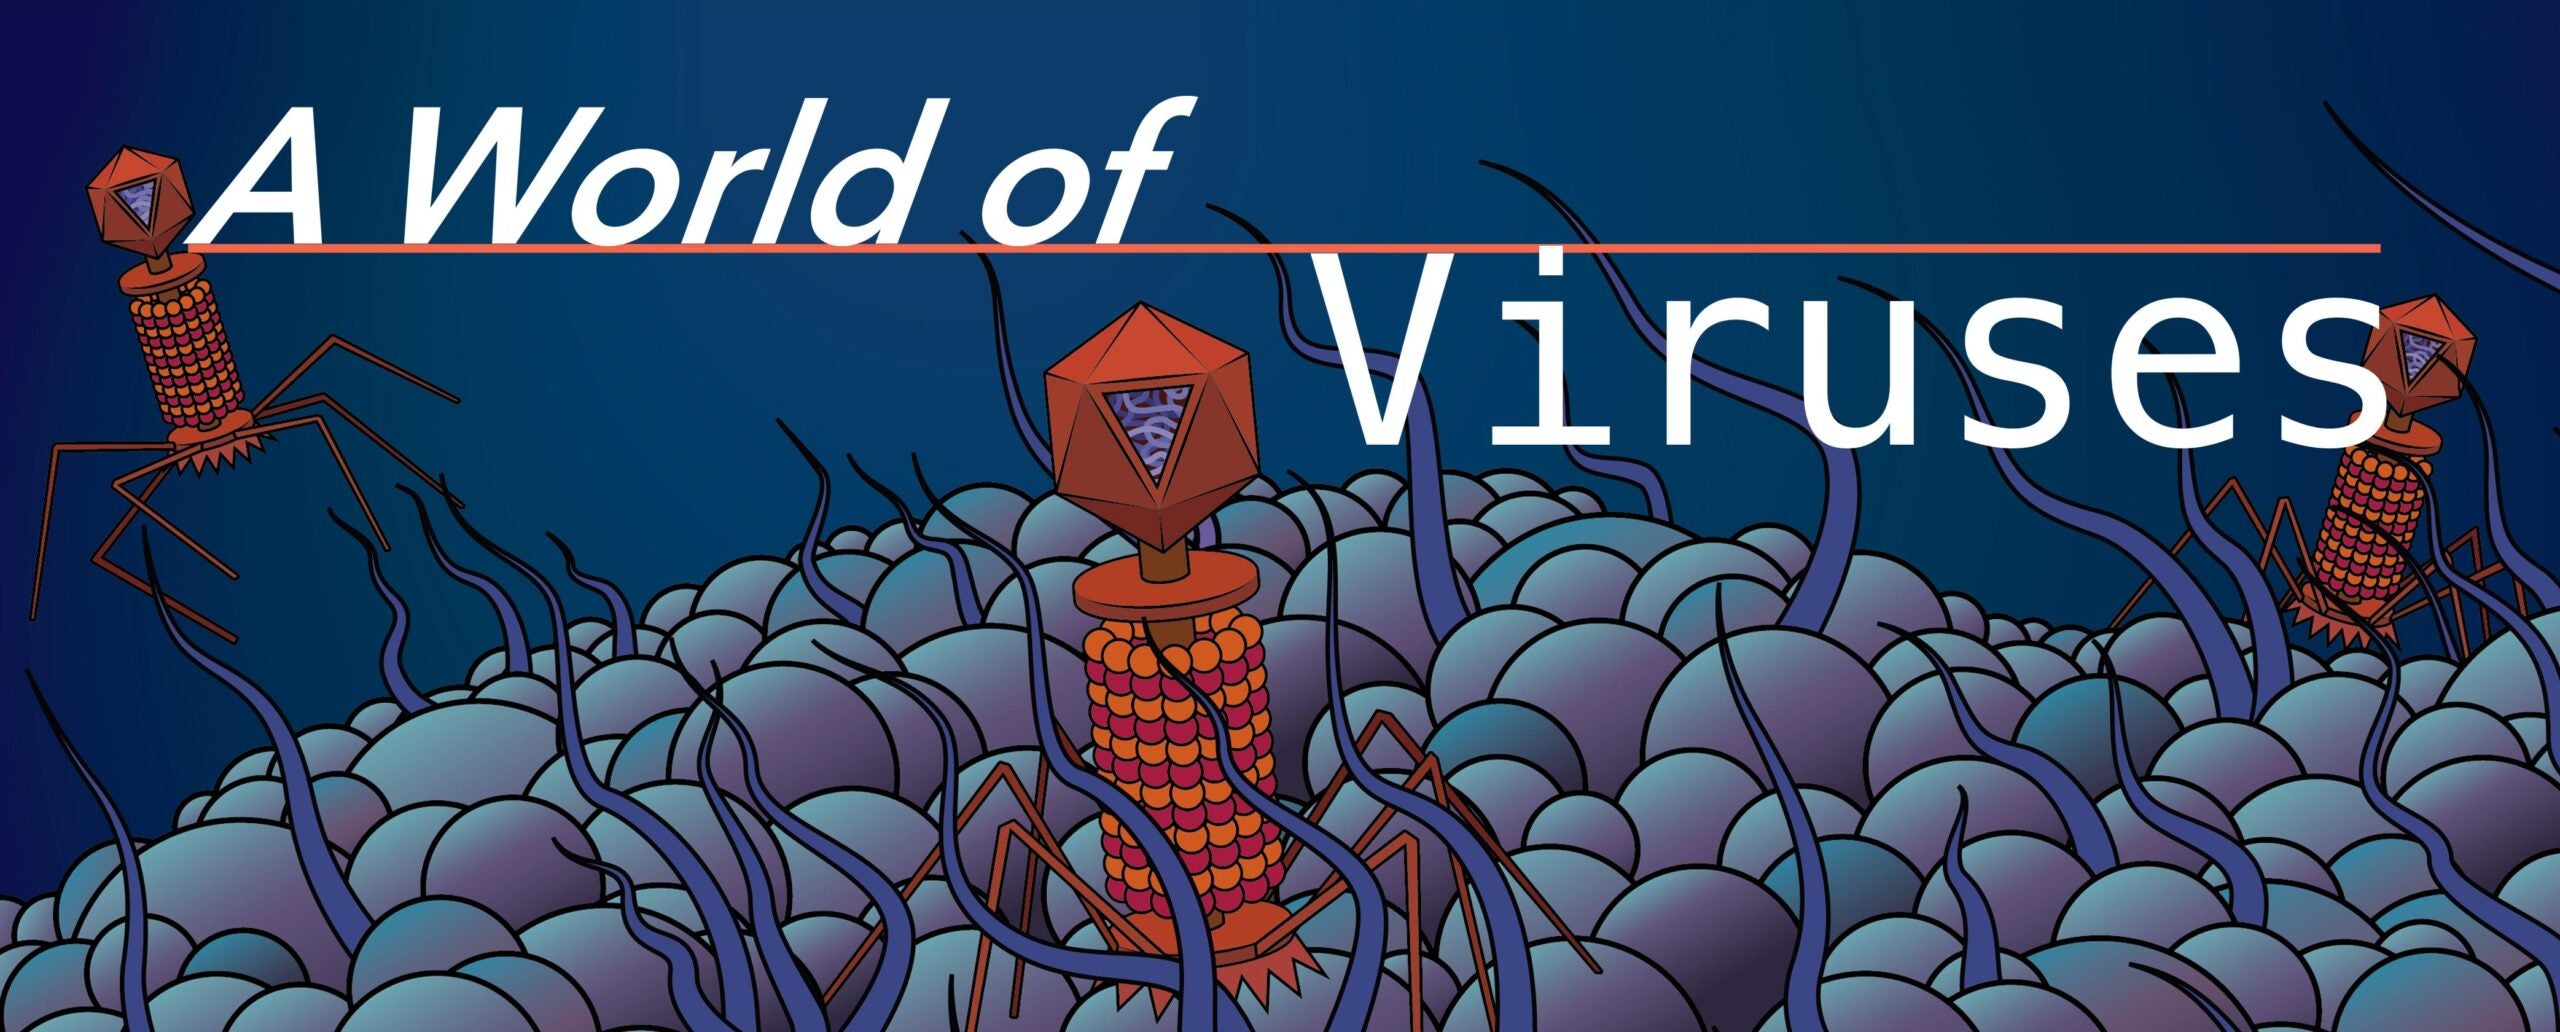 Online exhibit: A World of Viruses